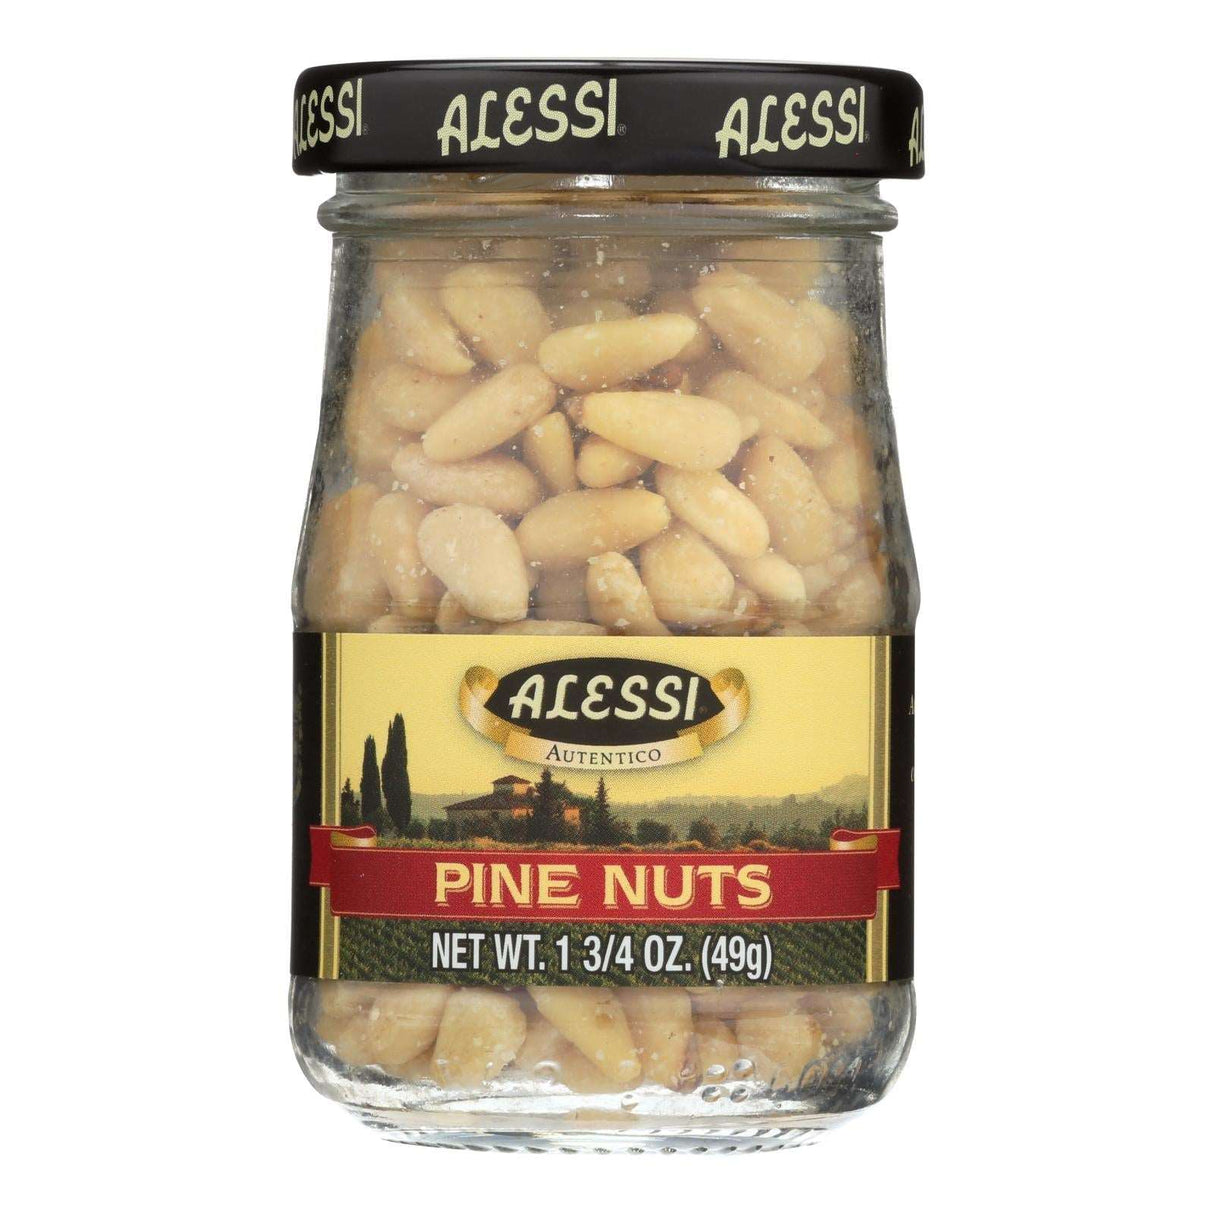 Alessi Premium Quality Pignoli Nuts for Gourmet Dishes (1.75 Oz., Pack of 12) - Cozy Farm 